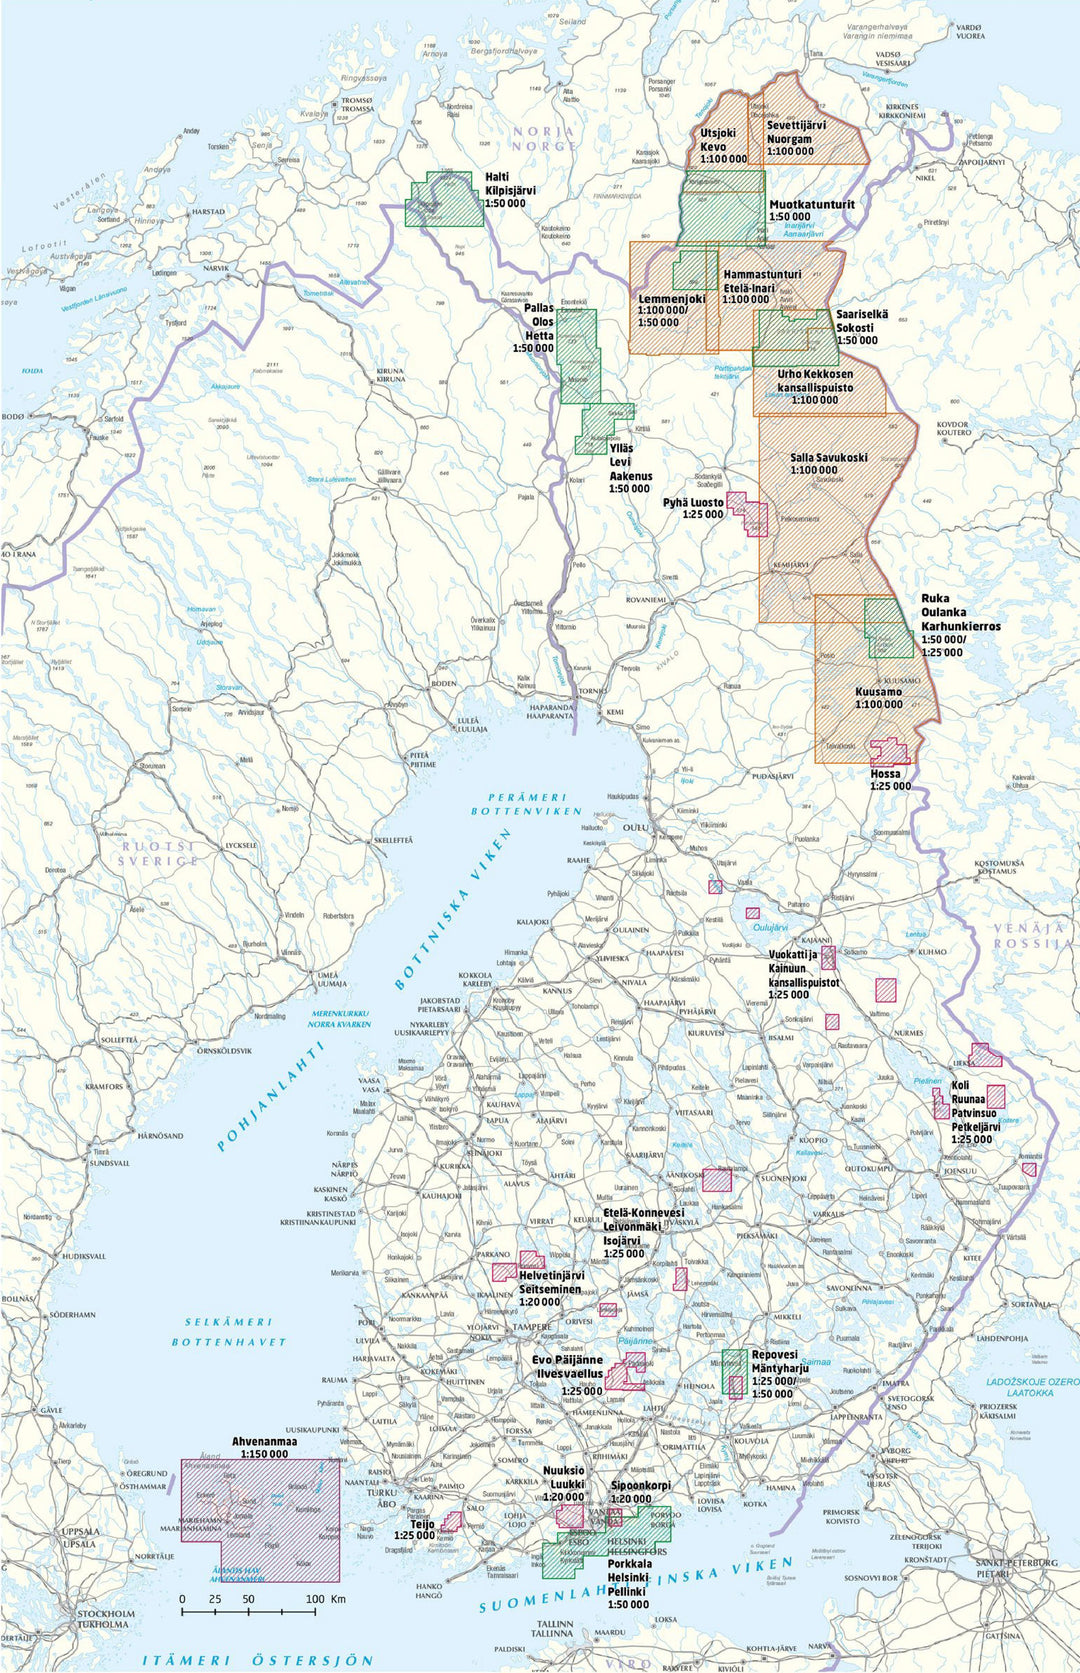 Beau livre (en anglais) - Forests of Finland | Karttakeskus beau livre Karttakeskus 